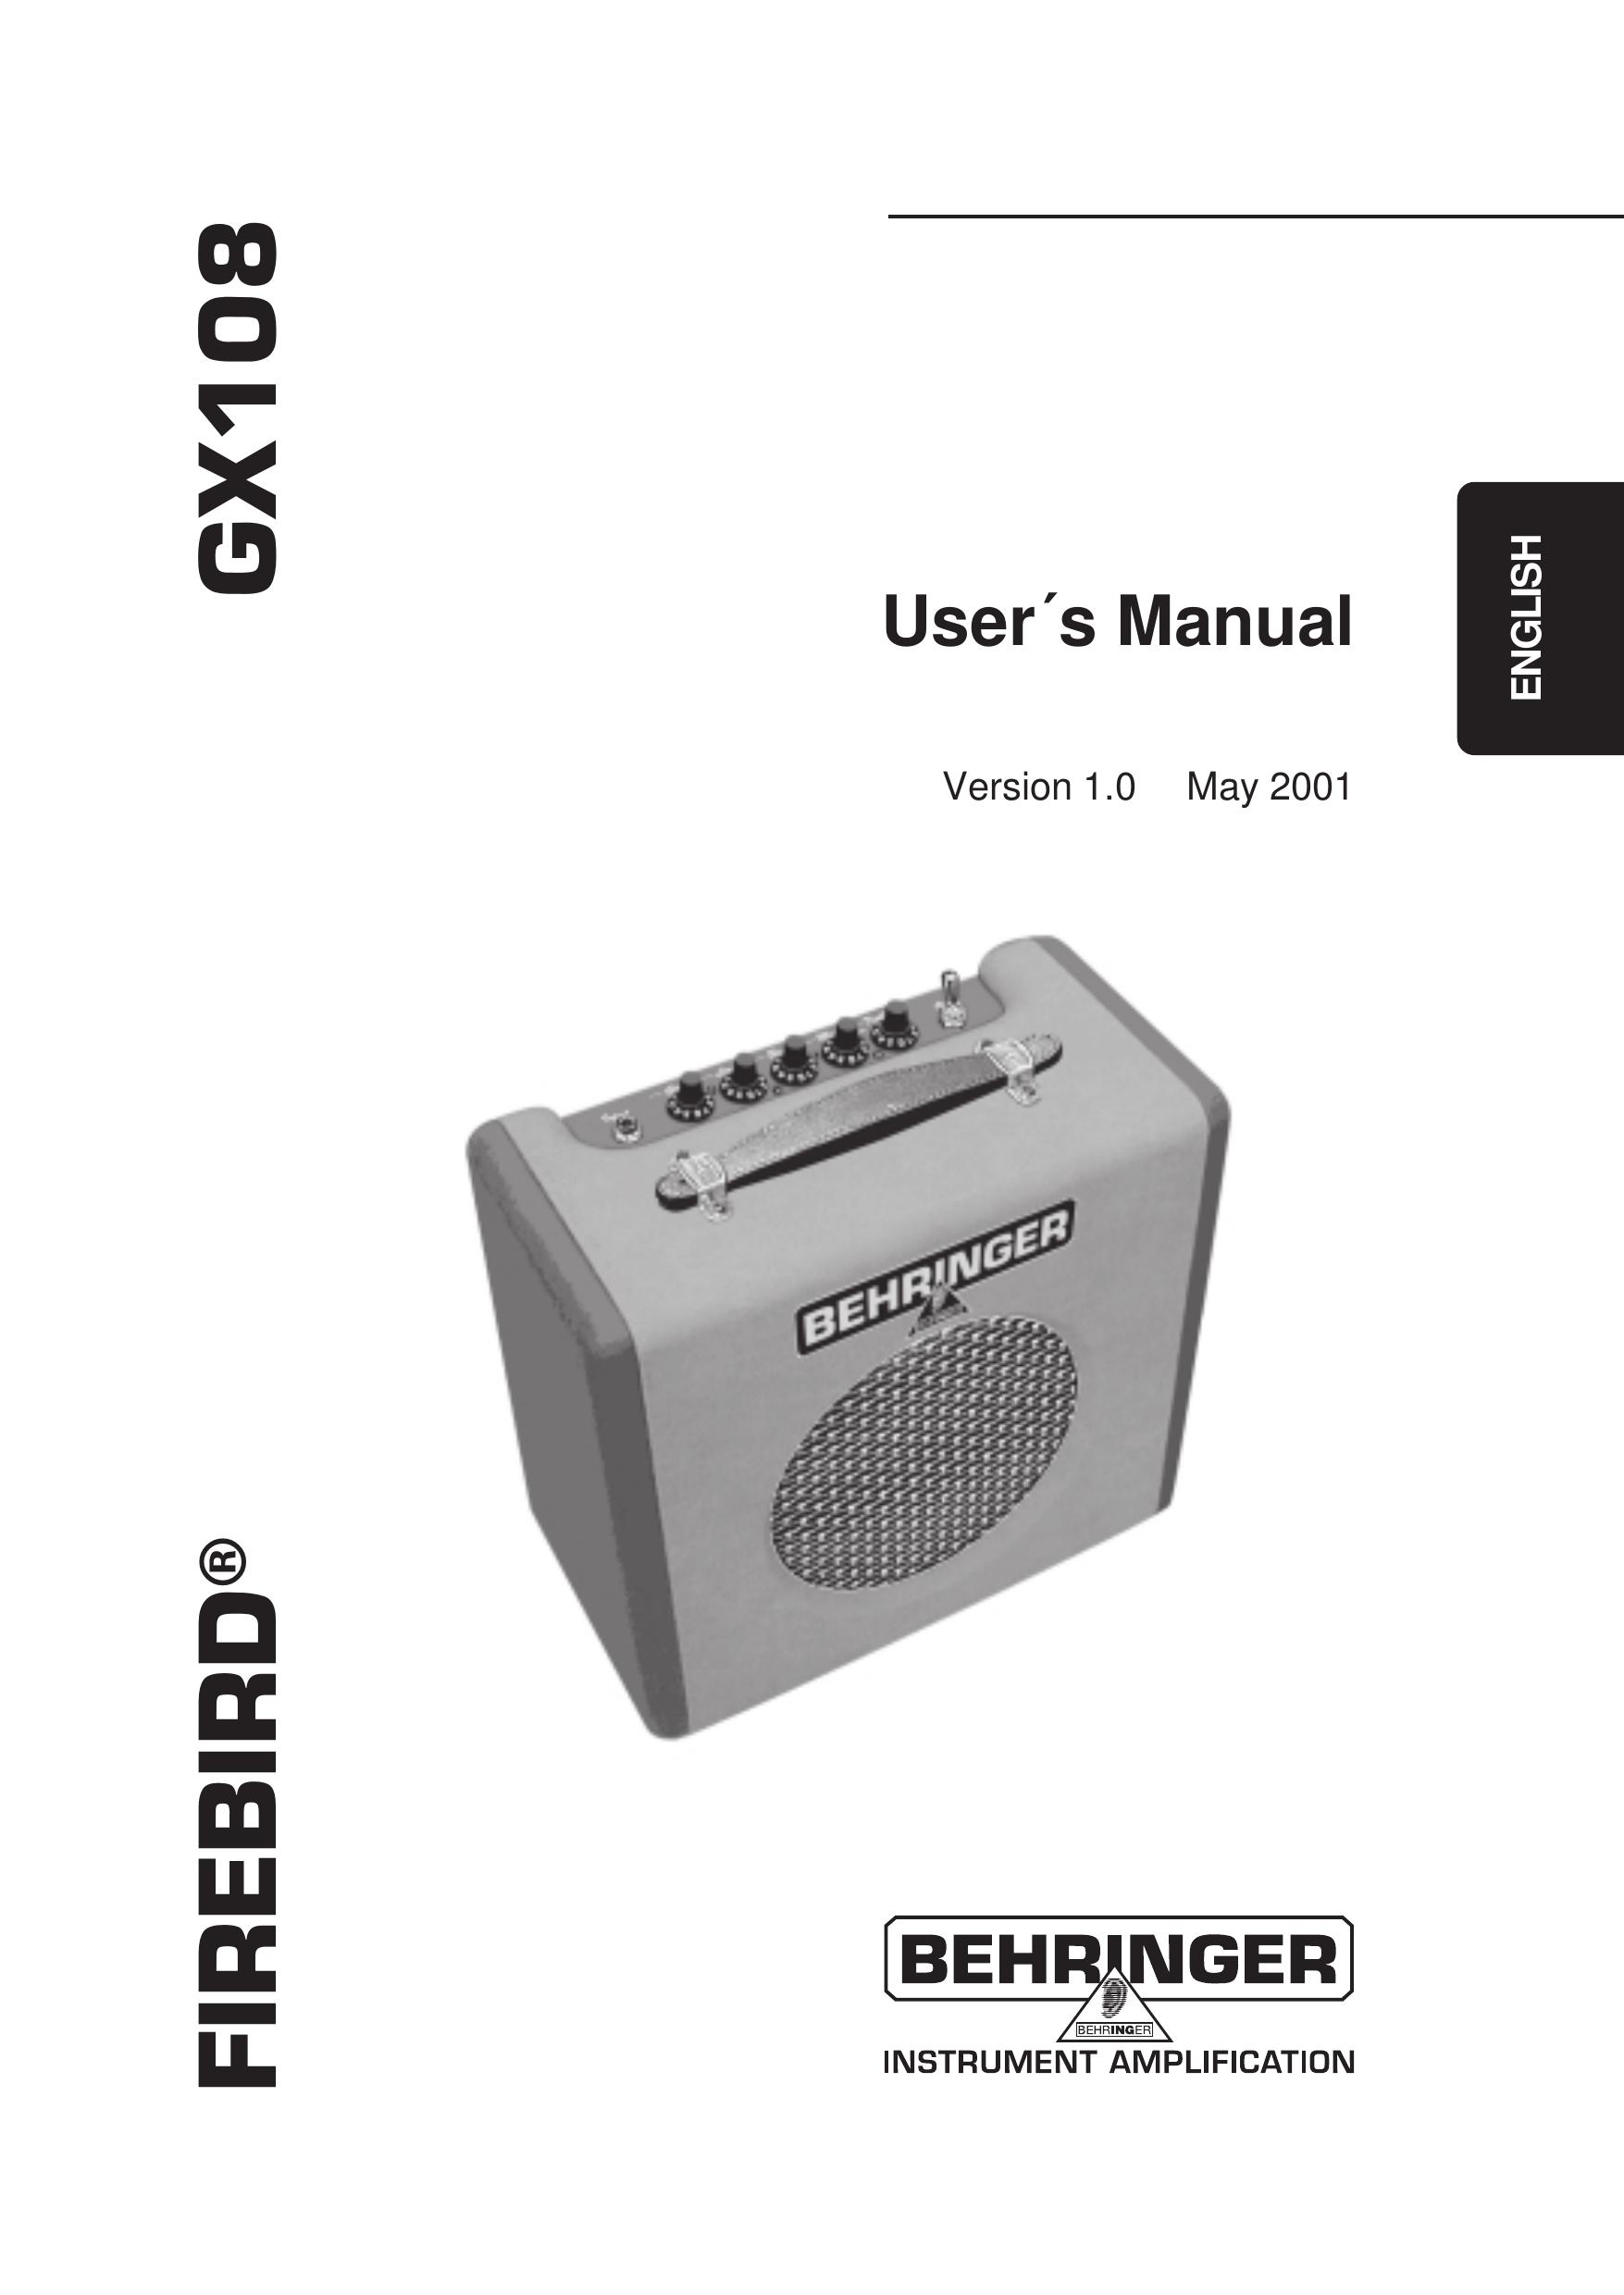 Behringer GX108 Musical Instrument Amplifier User Manual